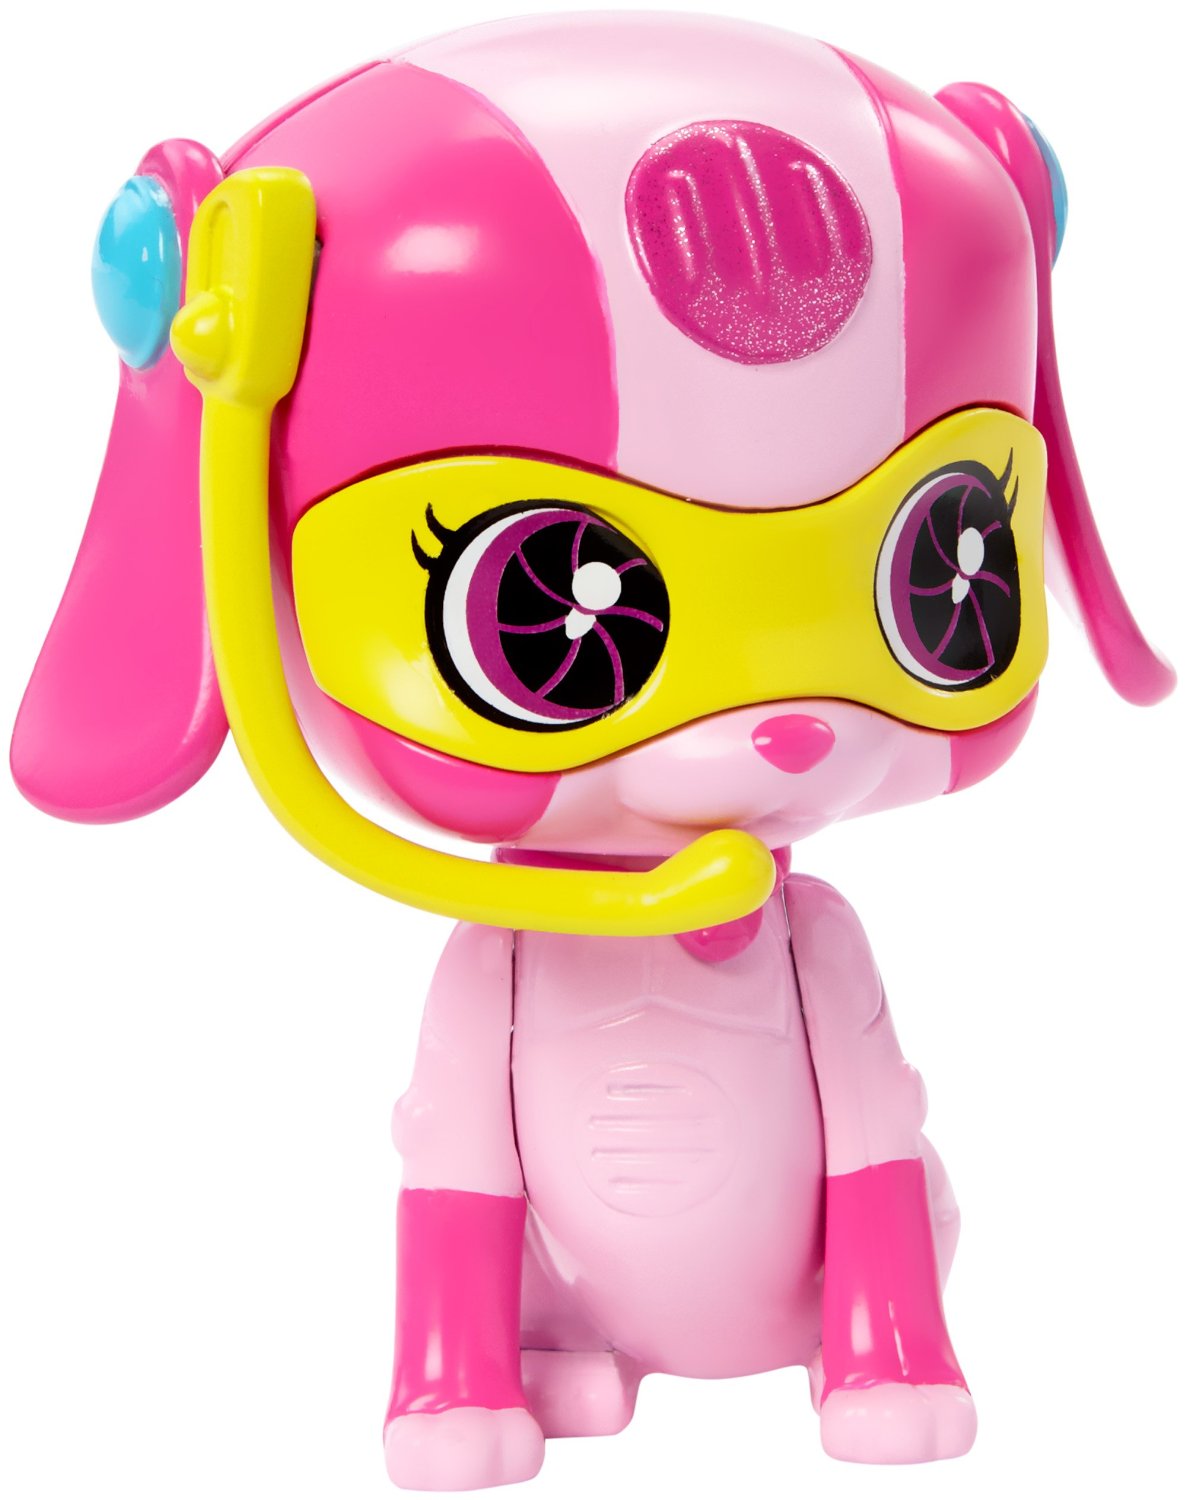 Супер питомец Барби. Barbie Spy Squad игрушка щенок. Собака робот игрушка Барби.